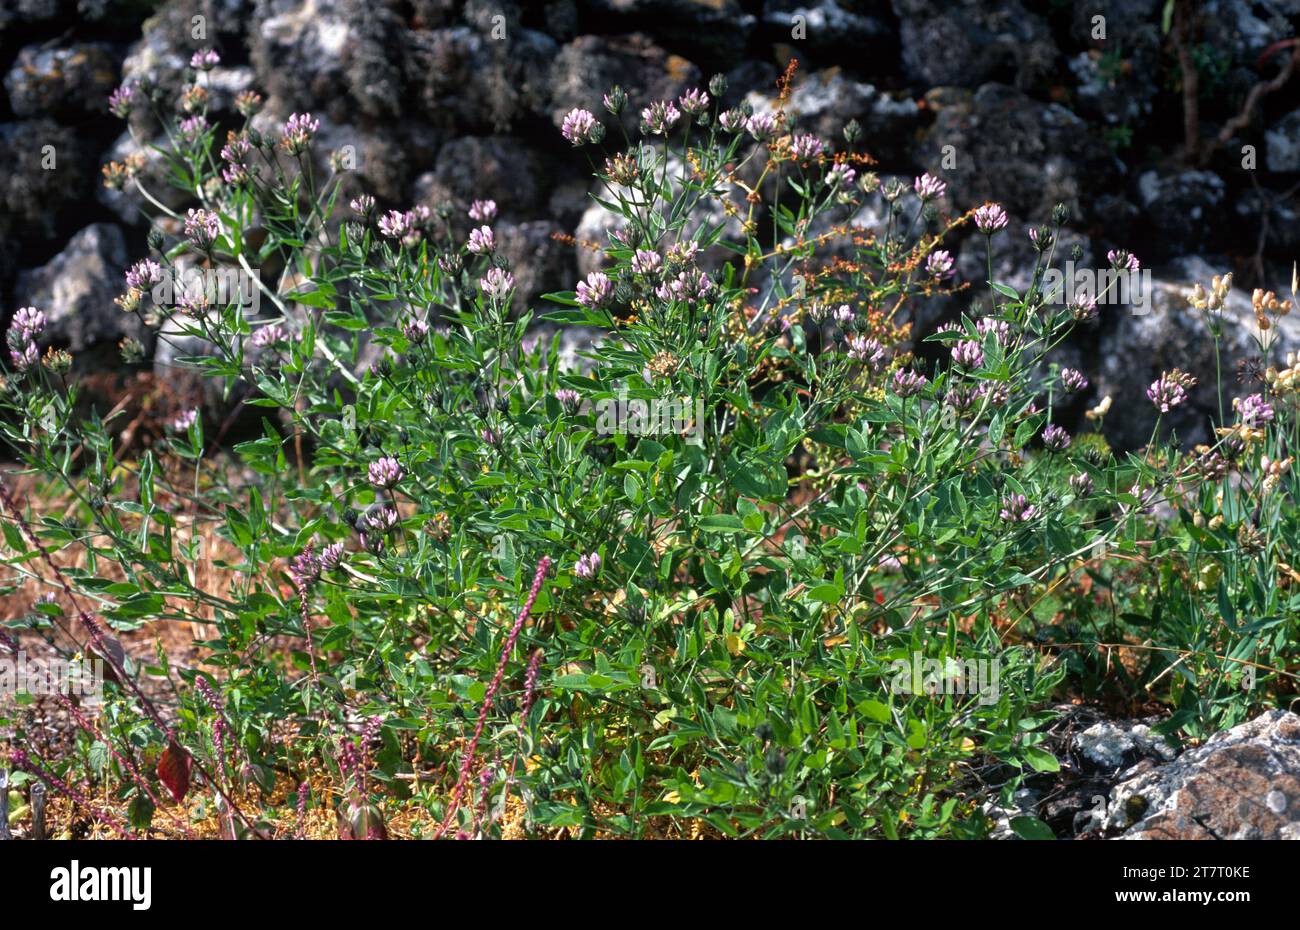 Arabian pea or pitch trefoil (Bituminaria bituminosa or Psoralea bituminosa) is a perennial herb native to Mediterranean basin and Canary Islands. Stock Photo